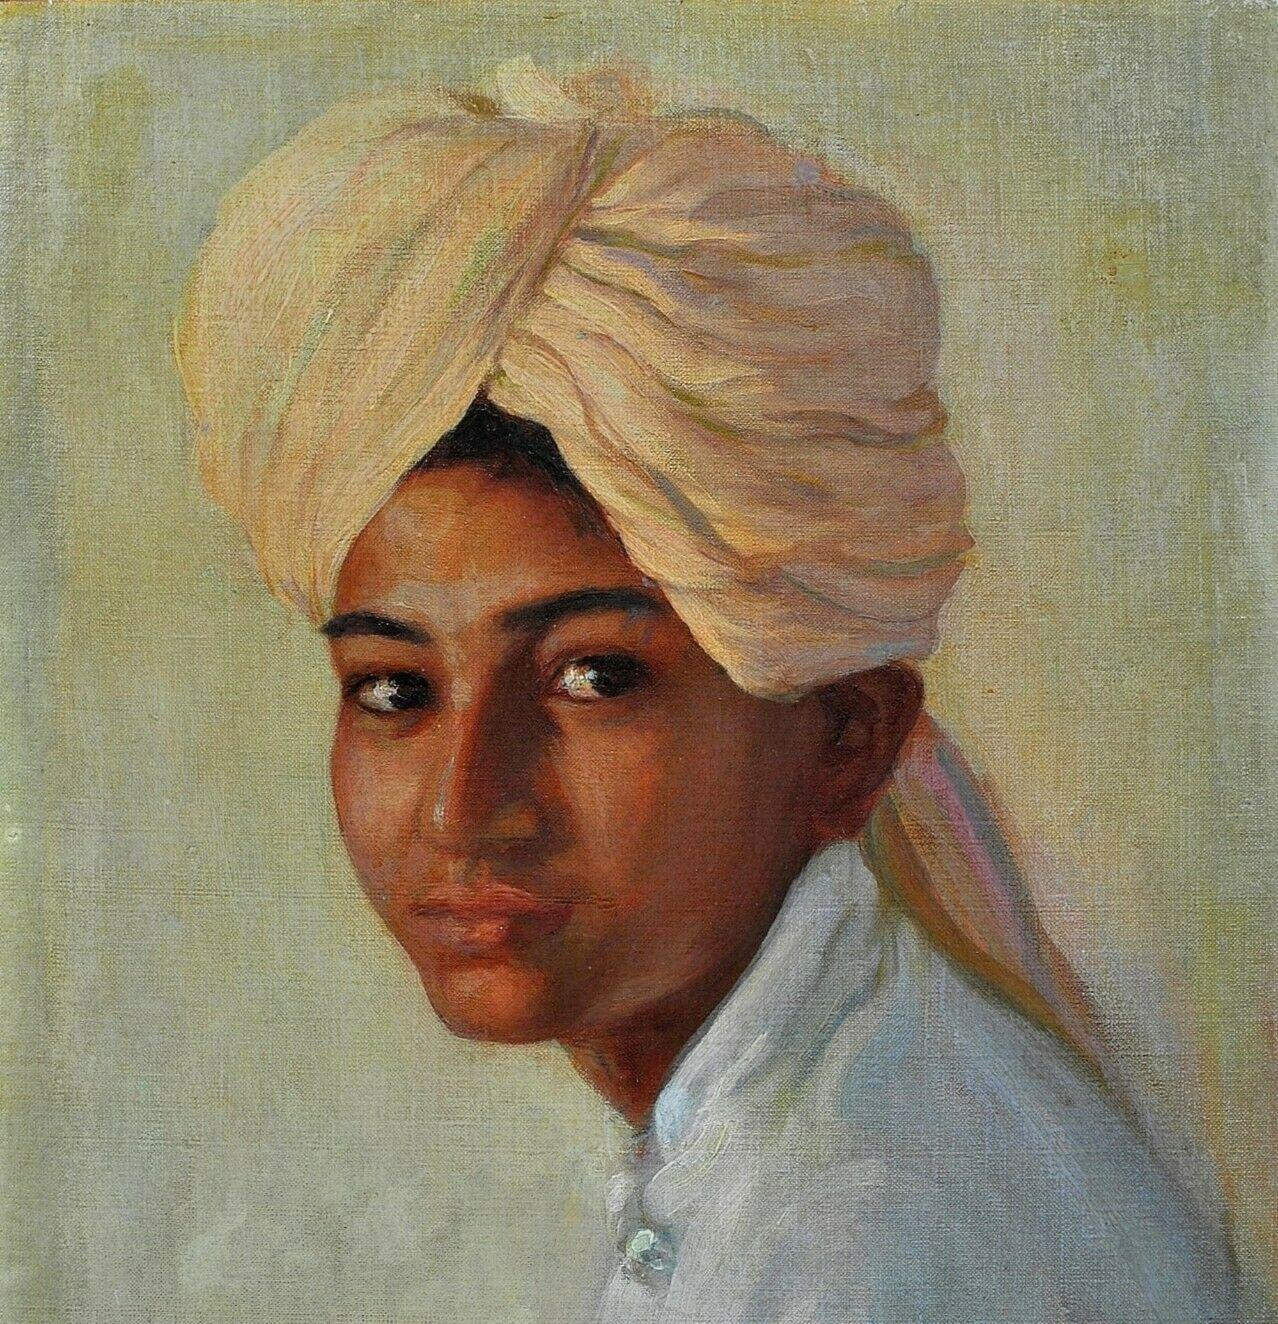 young sikh boy turban